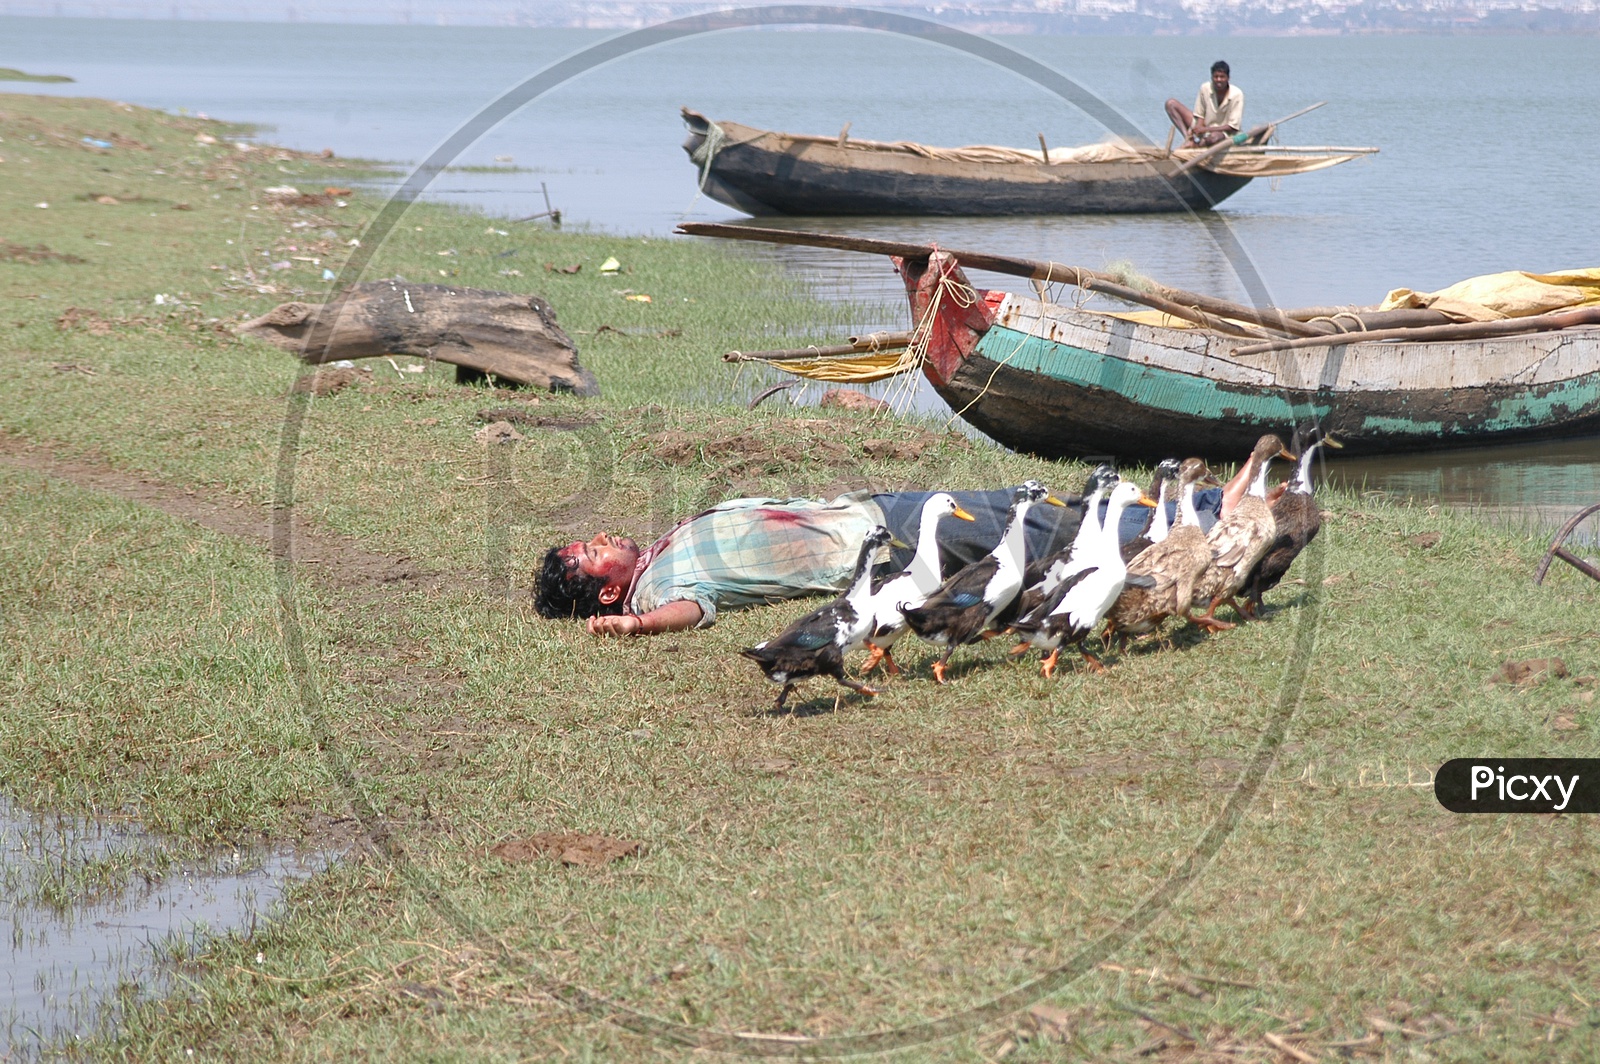 Drowned Man on Godavari River Bank